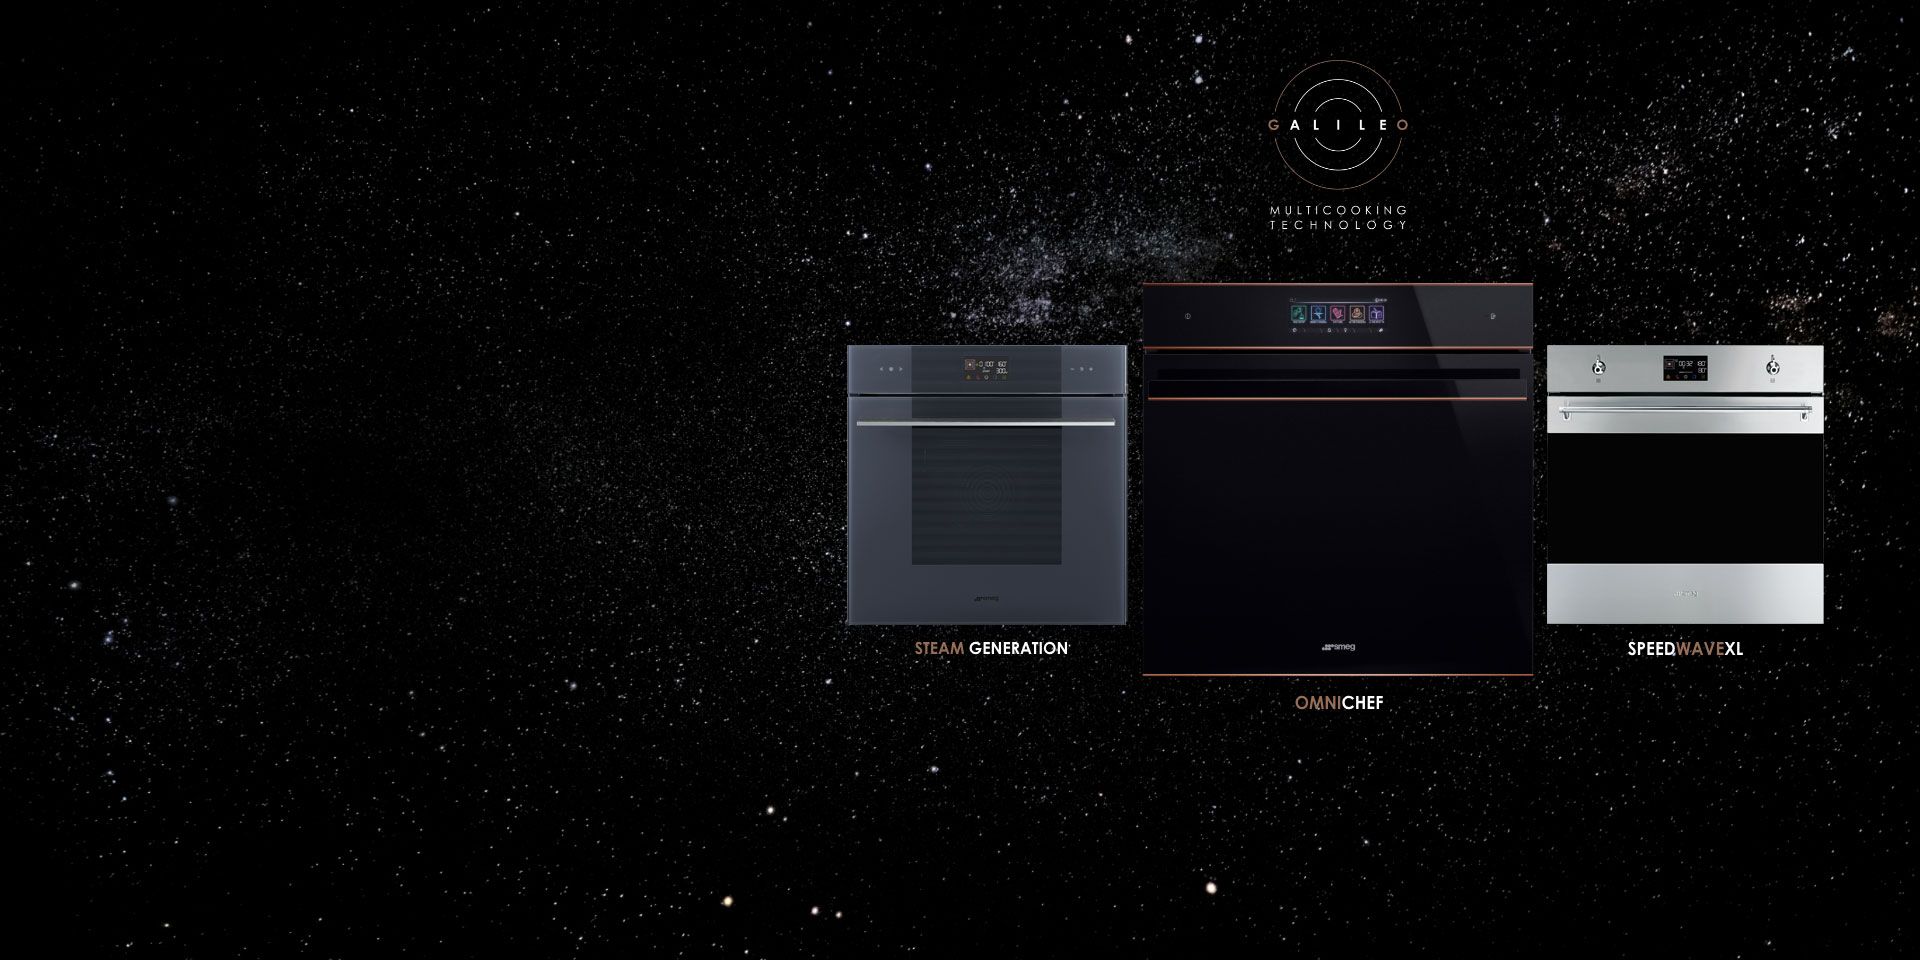 Smeg's new oven platform, Galileo multi-cooking technology